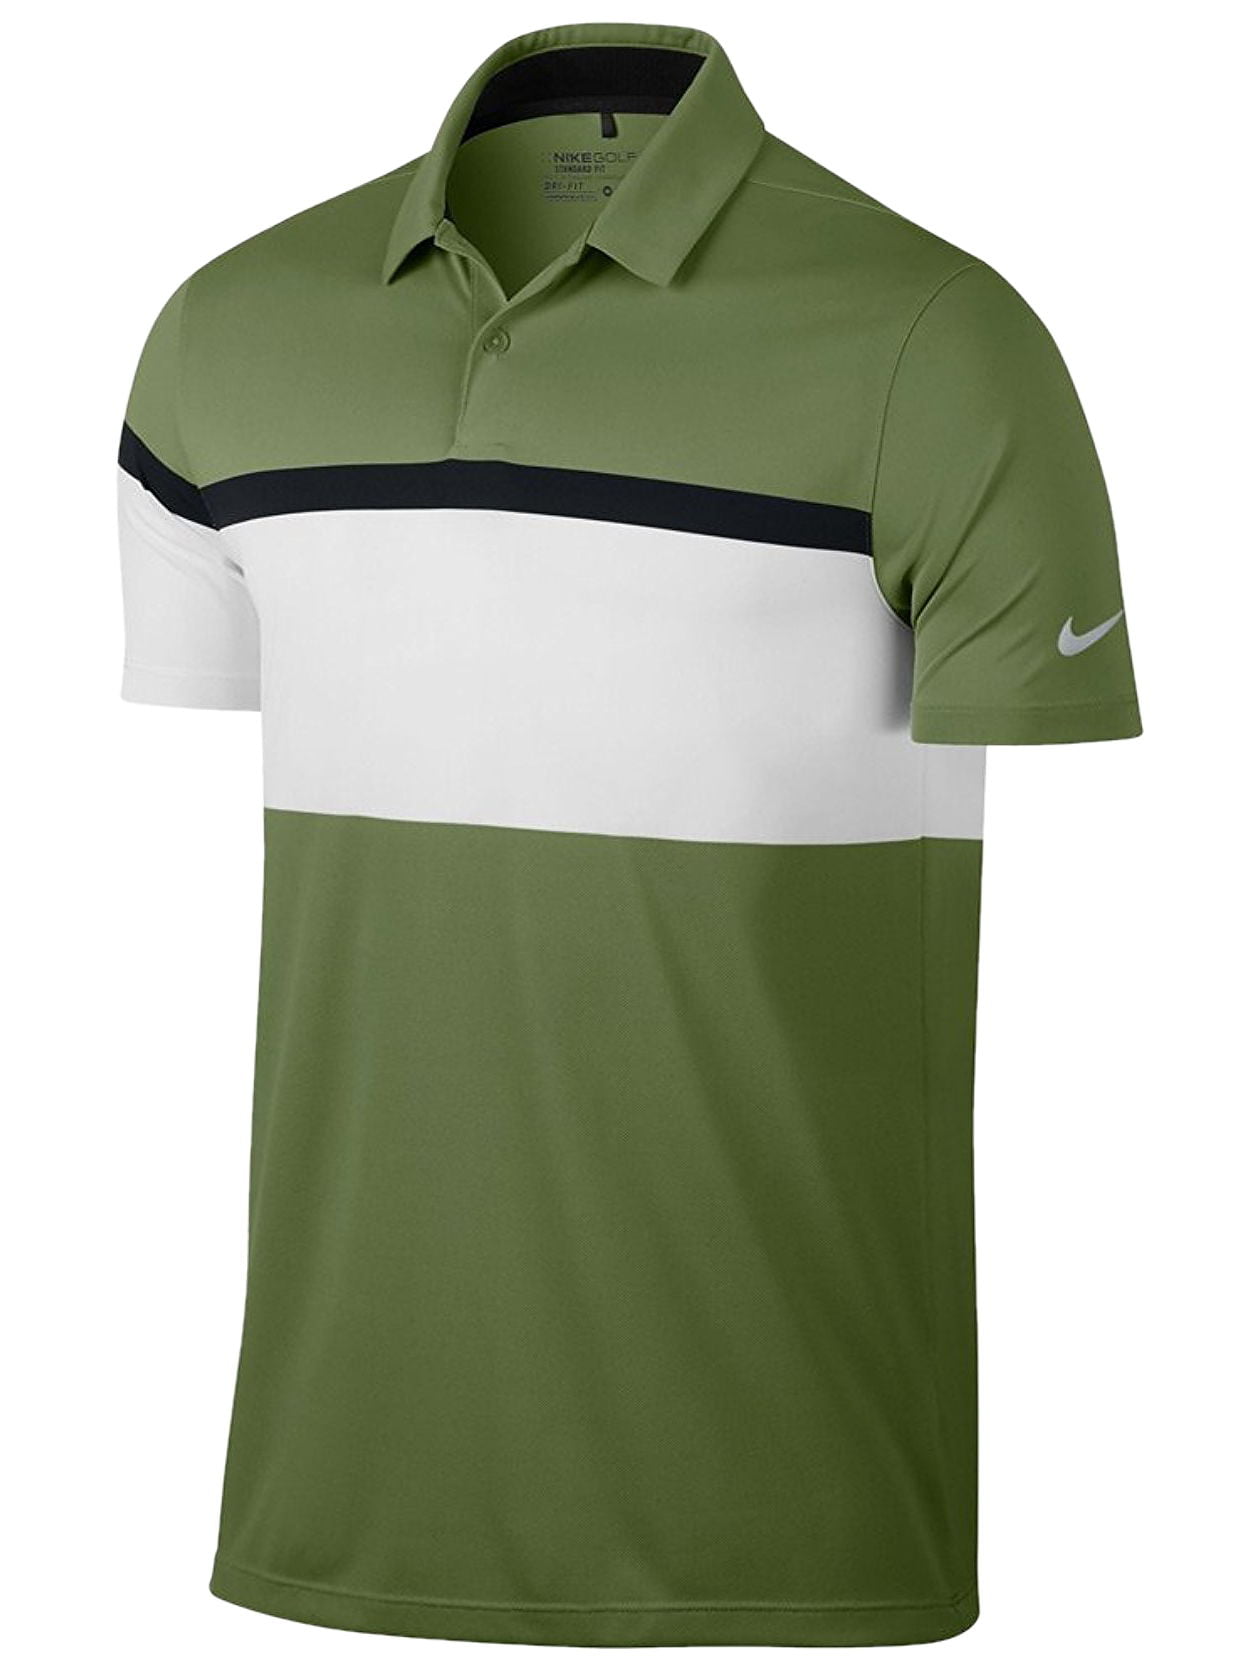 Nike Golf 'Mobility' Mens Green Color Block Polo Shirt - Walmart.com ...